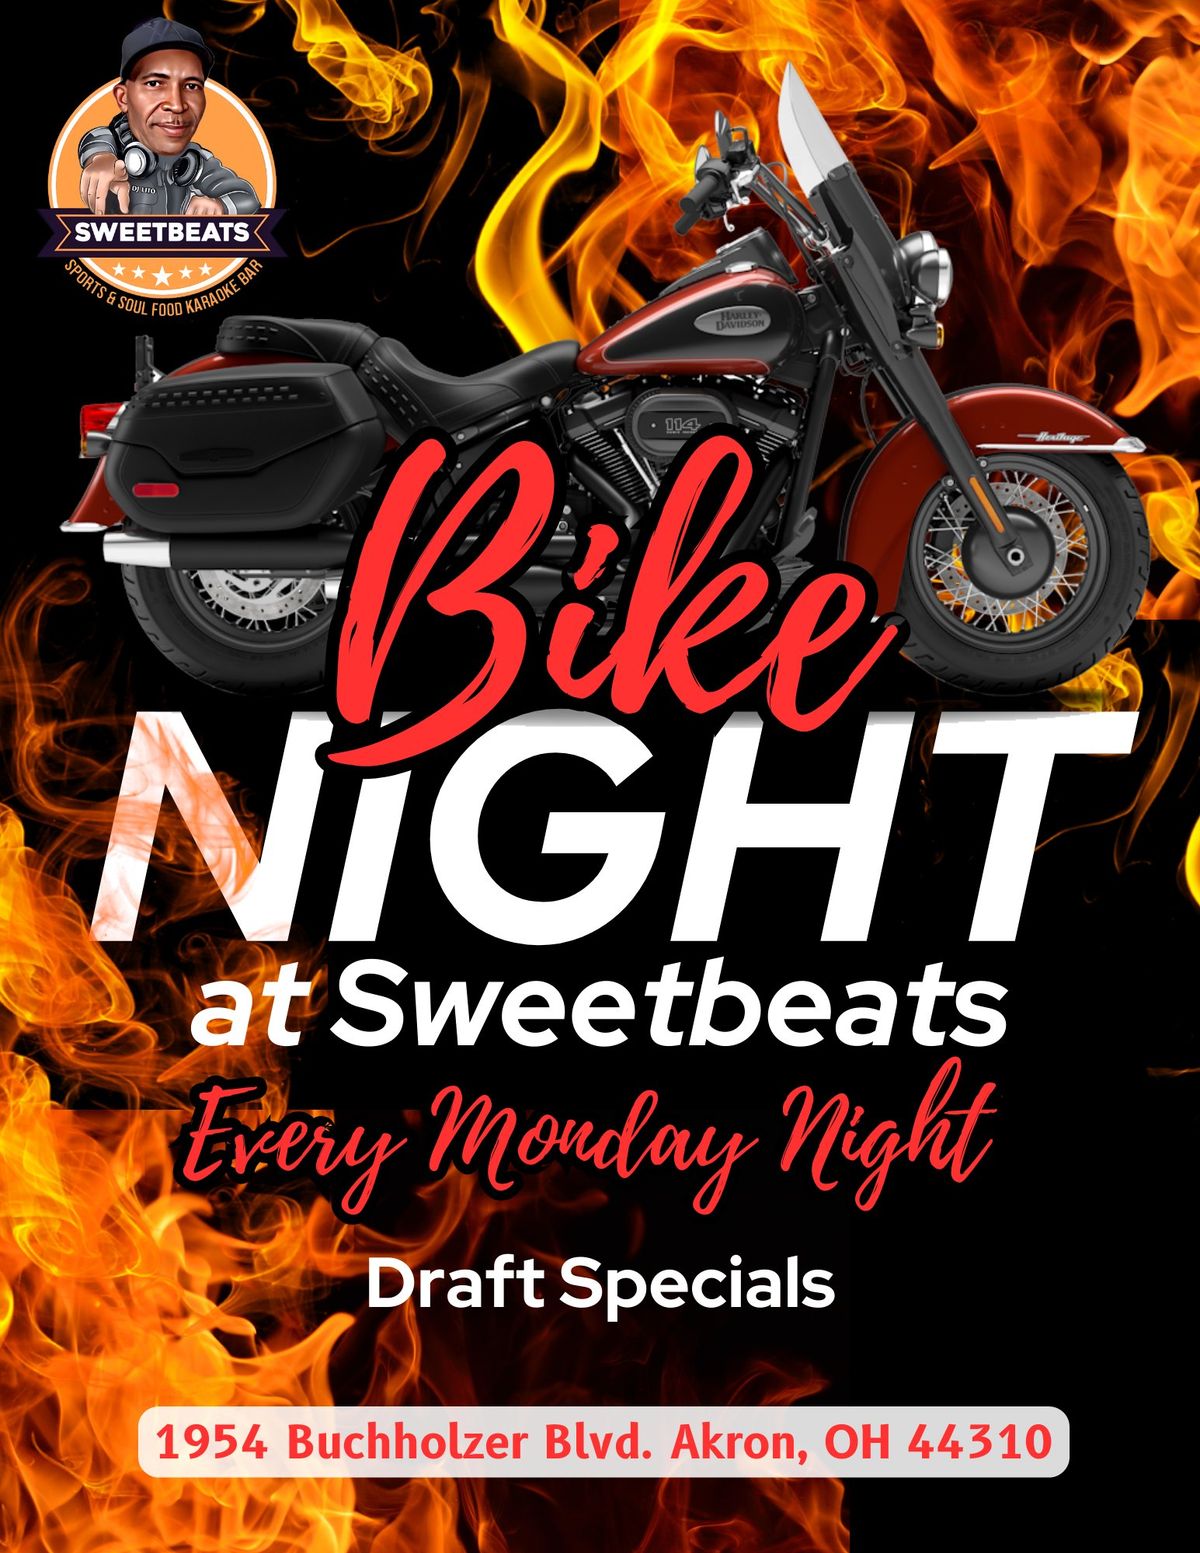 Sweetbeats Presents: Bike Night!